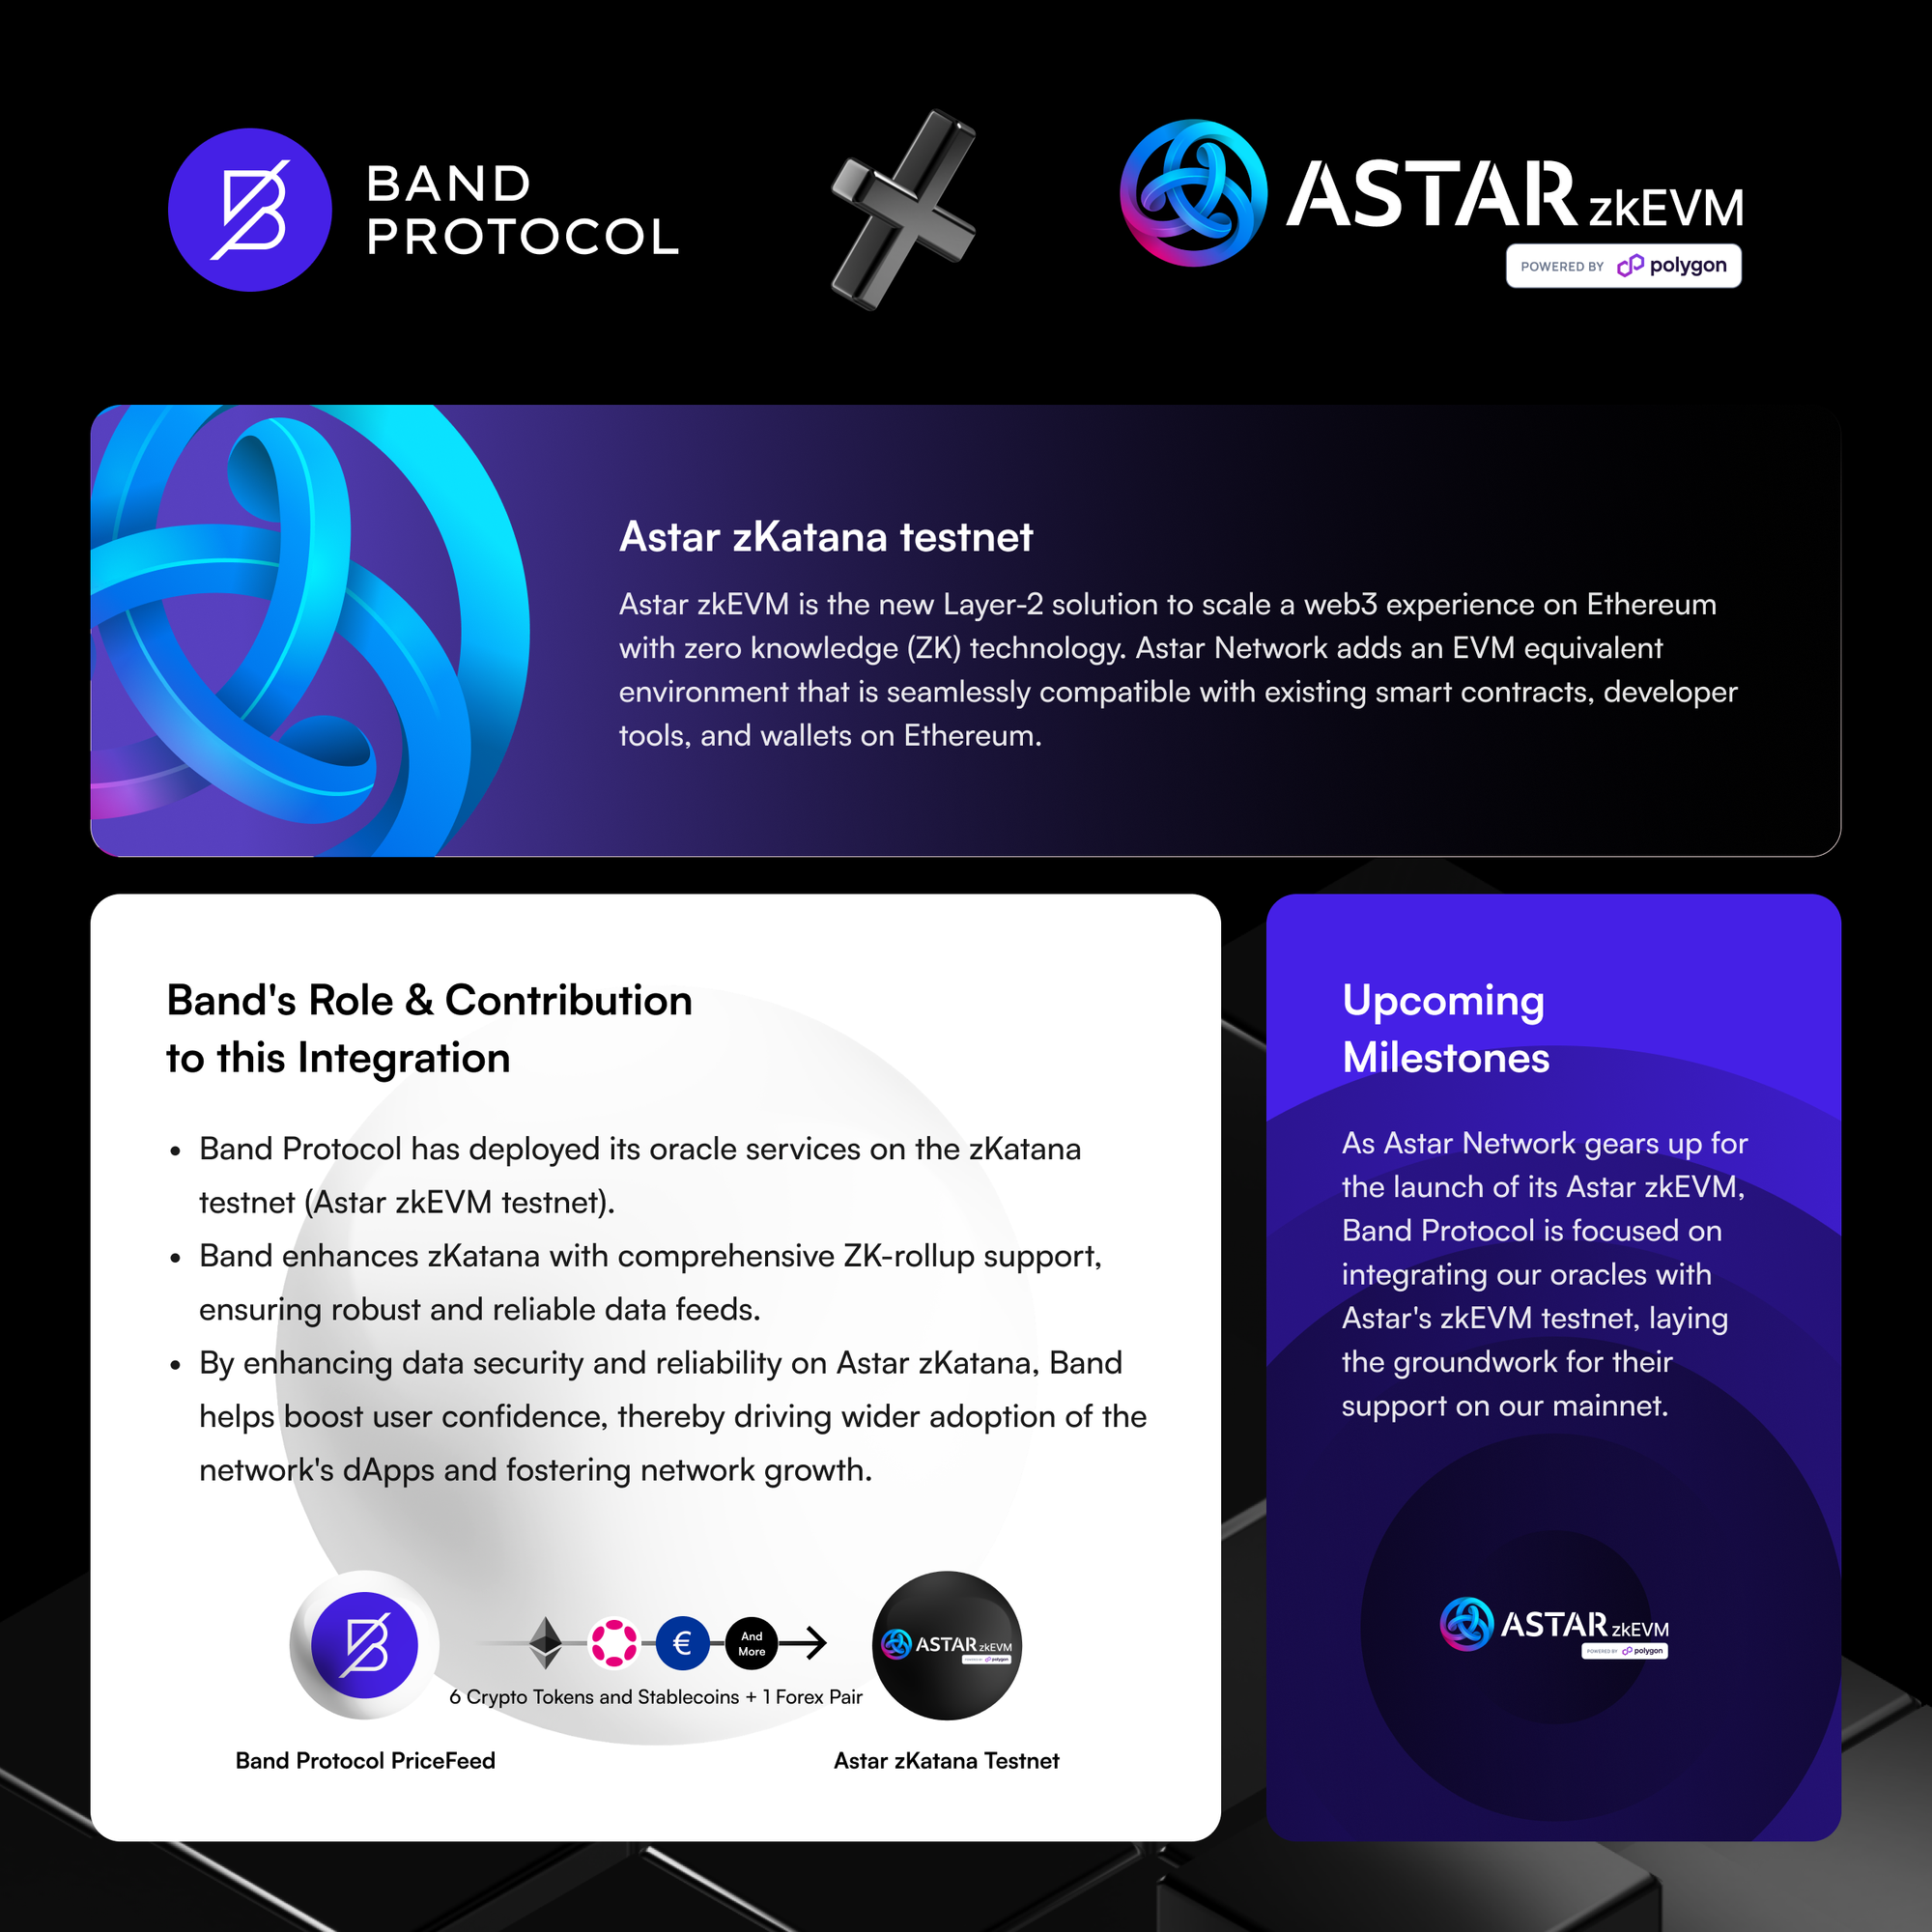 Band Protocol X Astar zKatana: Enabling ZK-Rollup Interoperability on Astar zkEVM Testnet